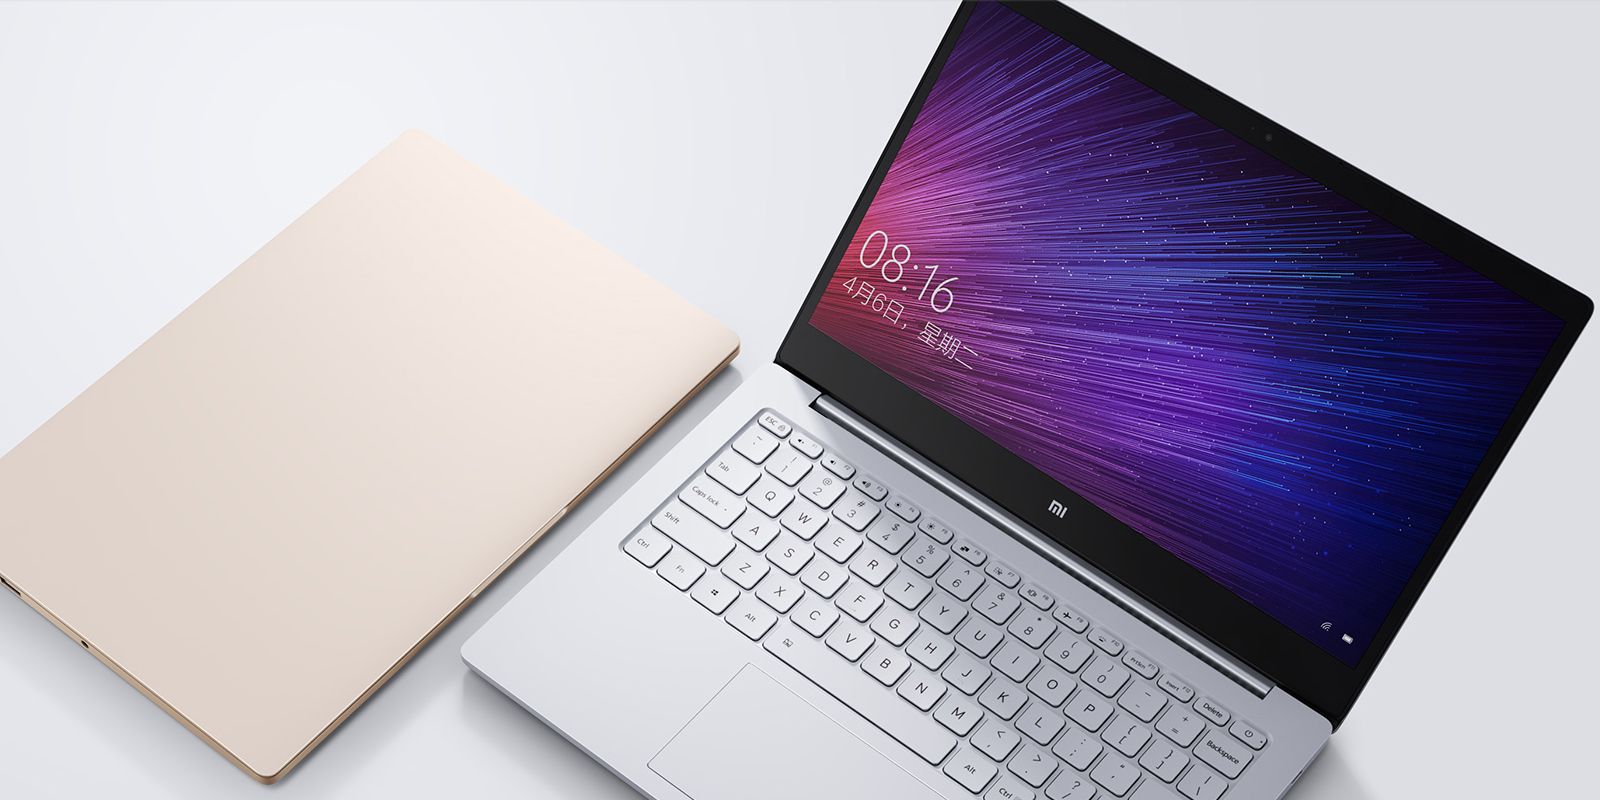 Ноутбук Xiaomi Mi Notebook Air 12.5" (2019) с Intel Core M3-8100Y